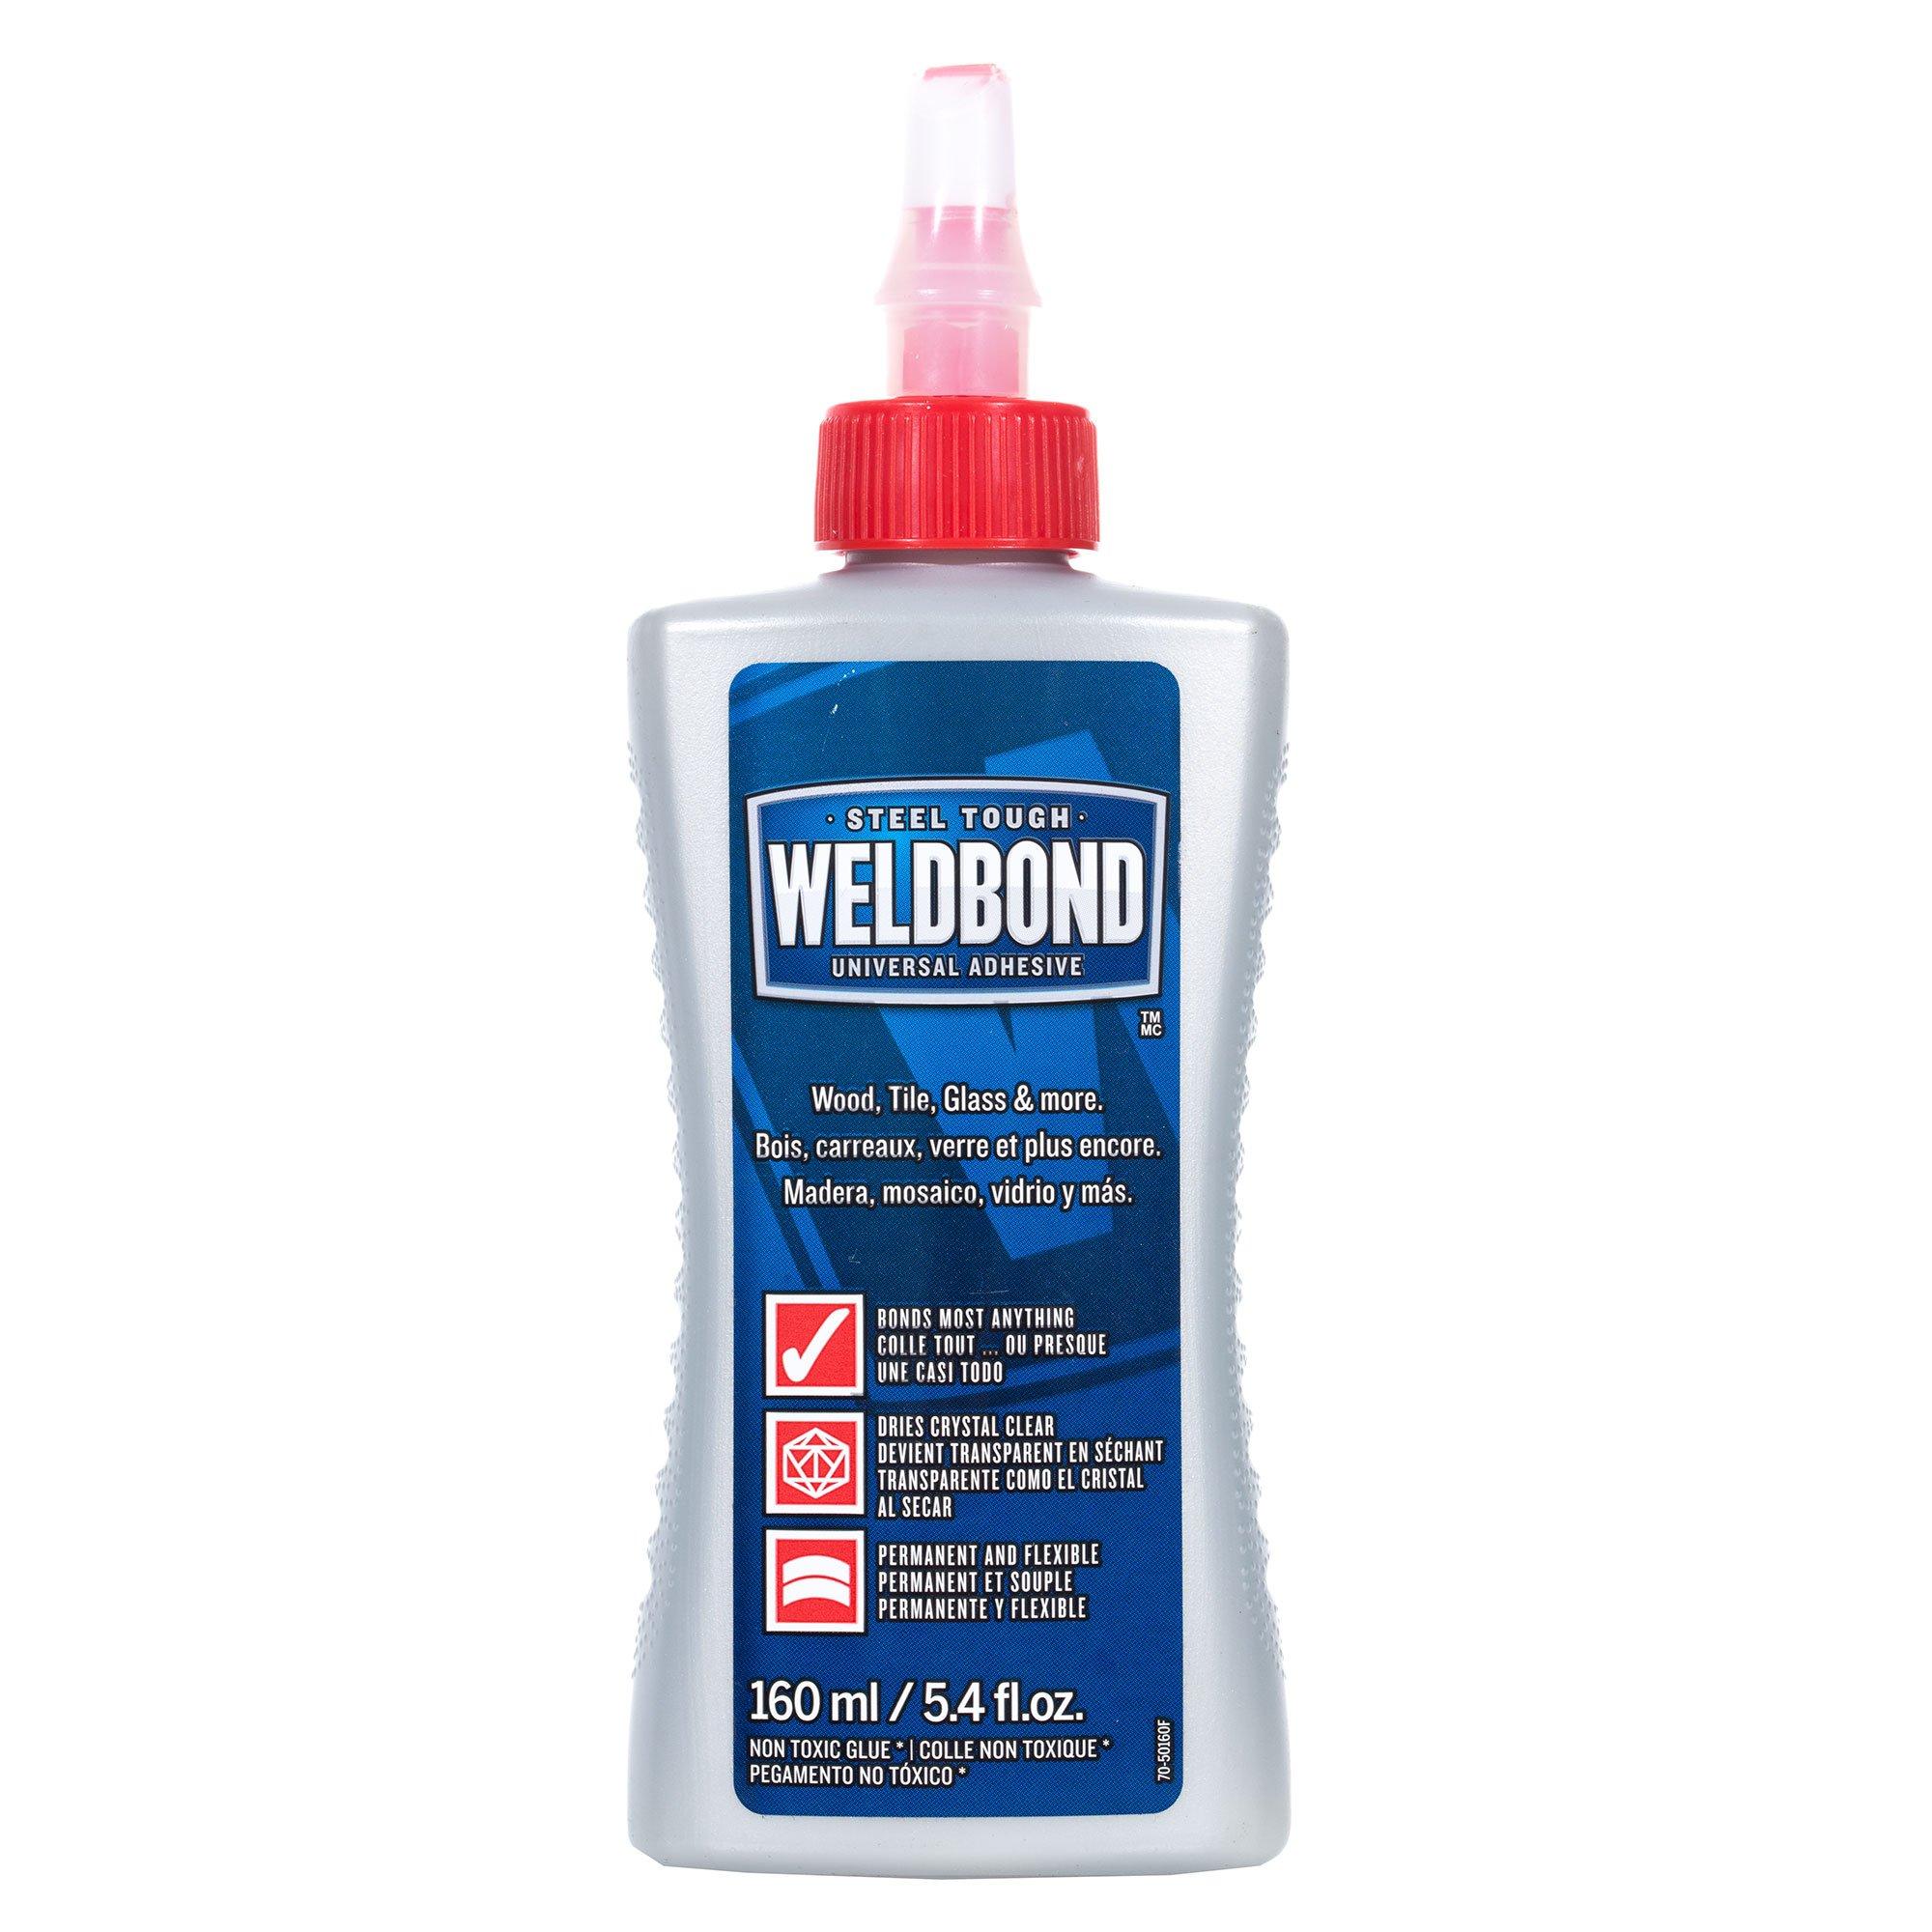 Weldbond Universal Adhesive reviews in Household Essentials